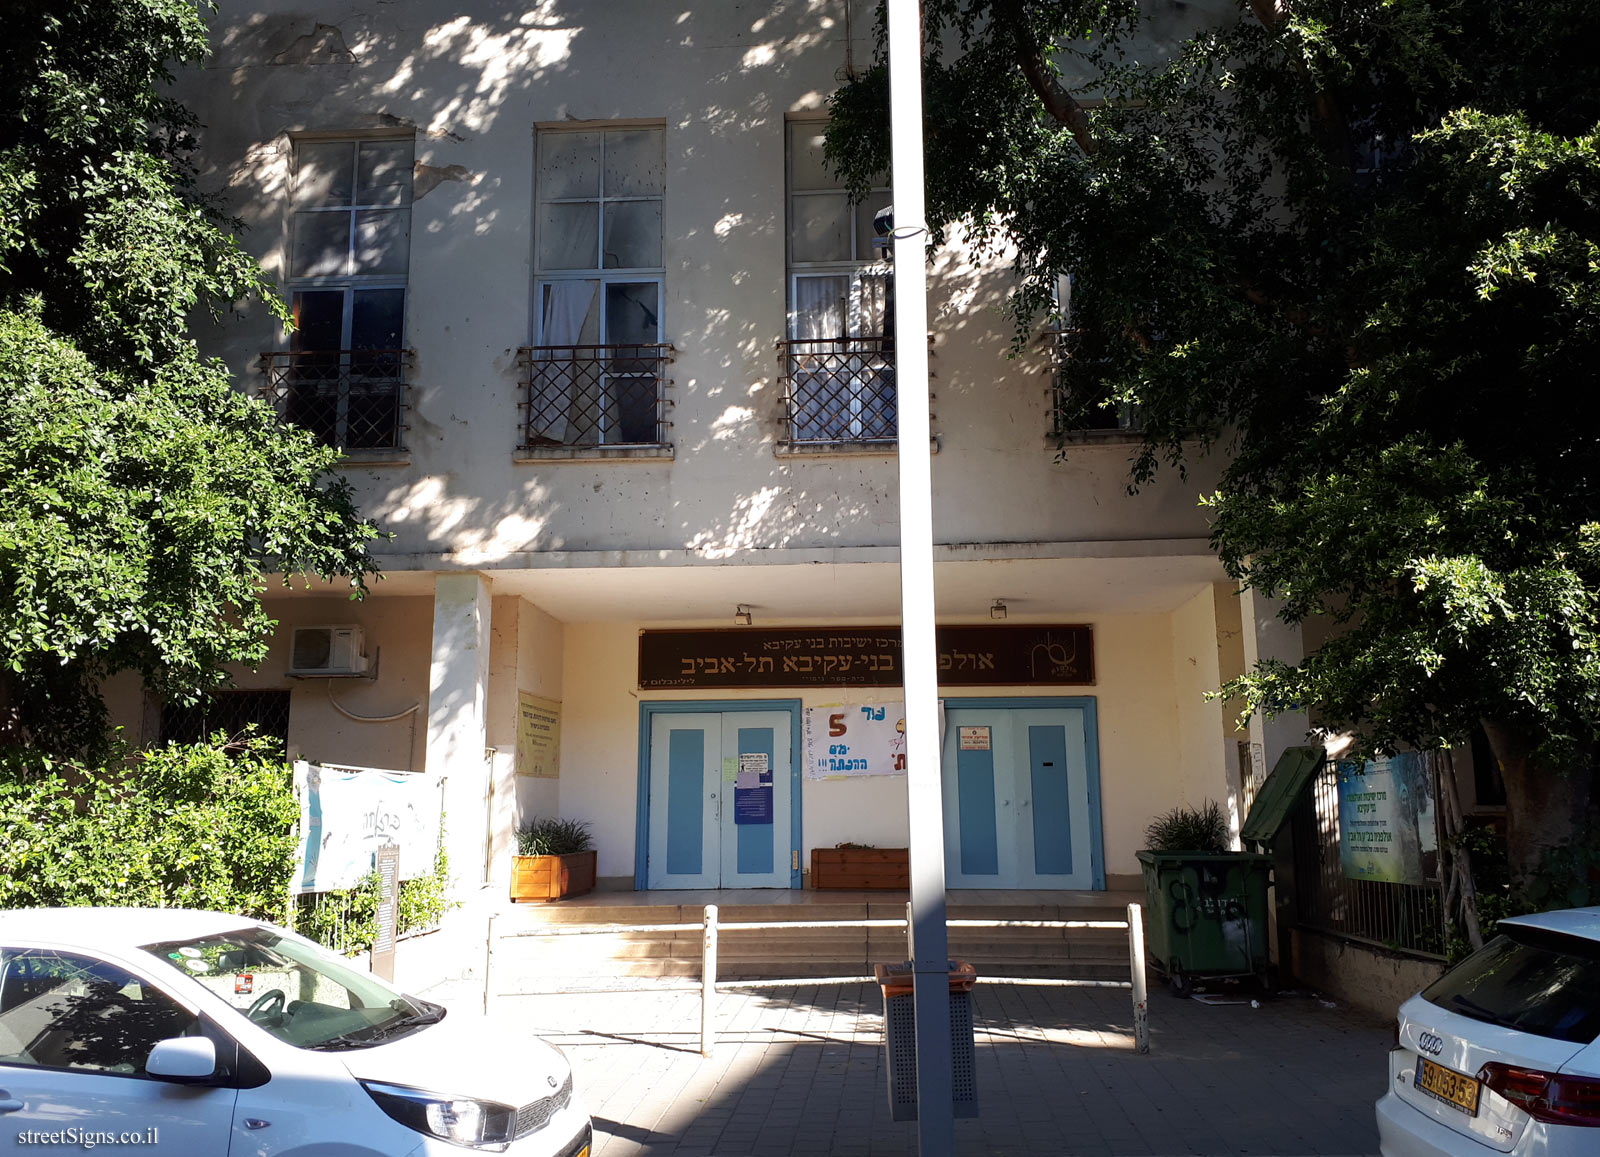 The Tachkemoni School - Lilienblum St 7, Tel Aviv-Yafo, Israel